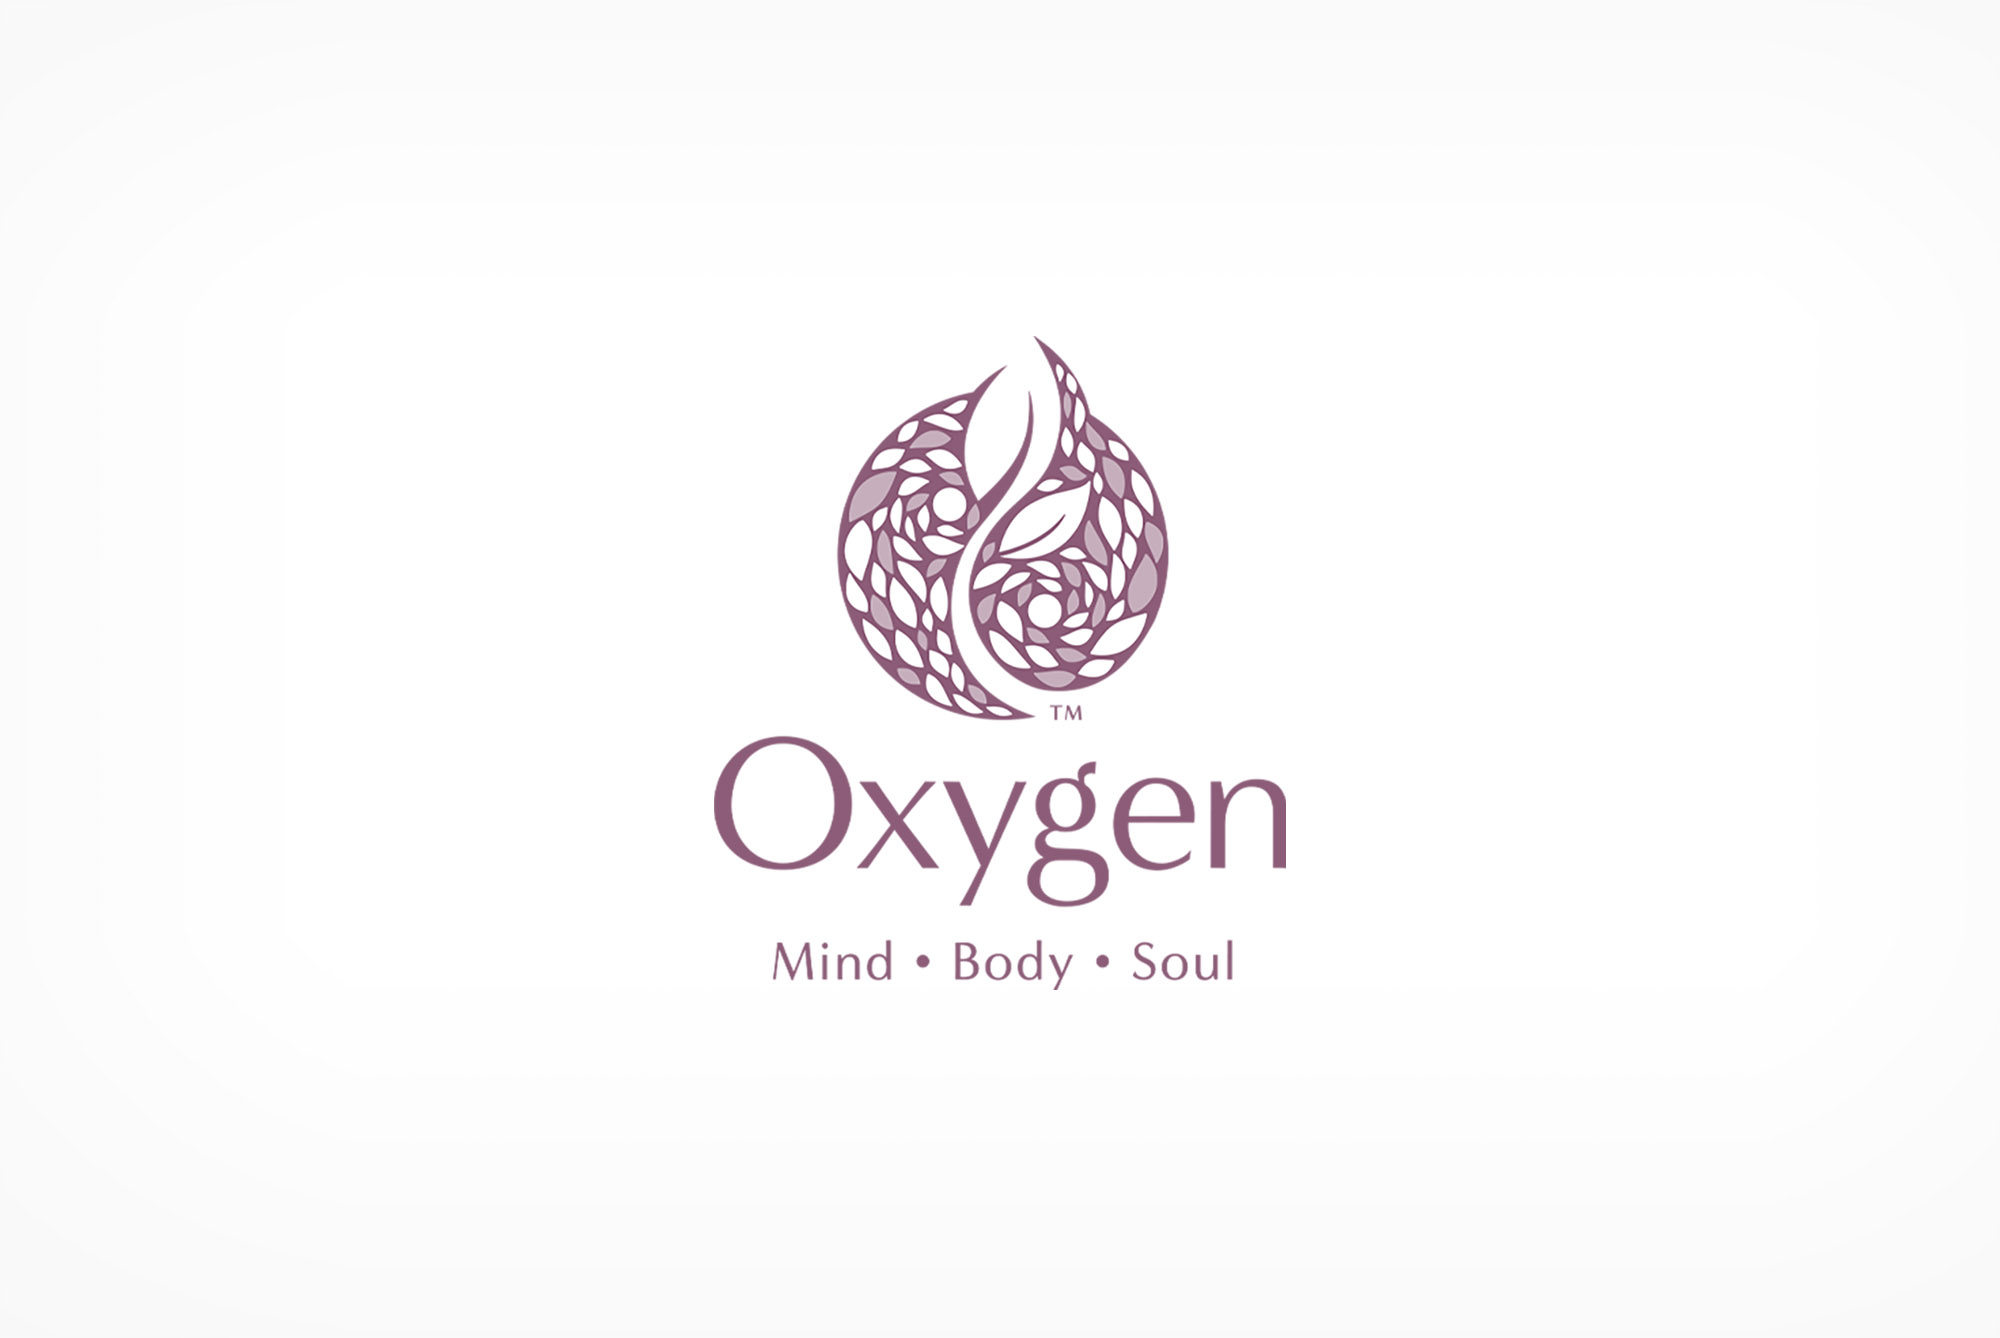 Oxygen brand logo refresh.